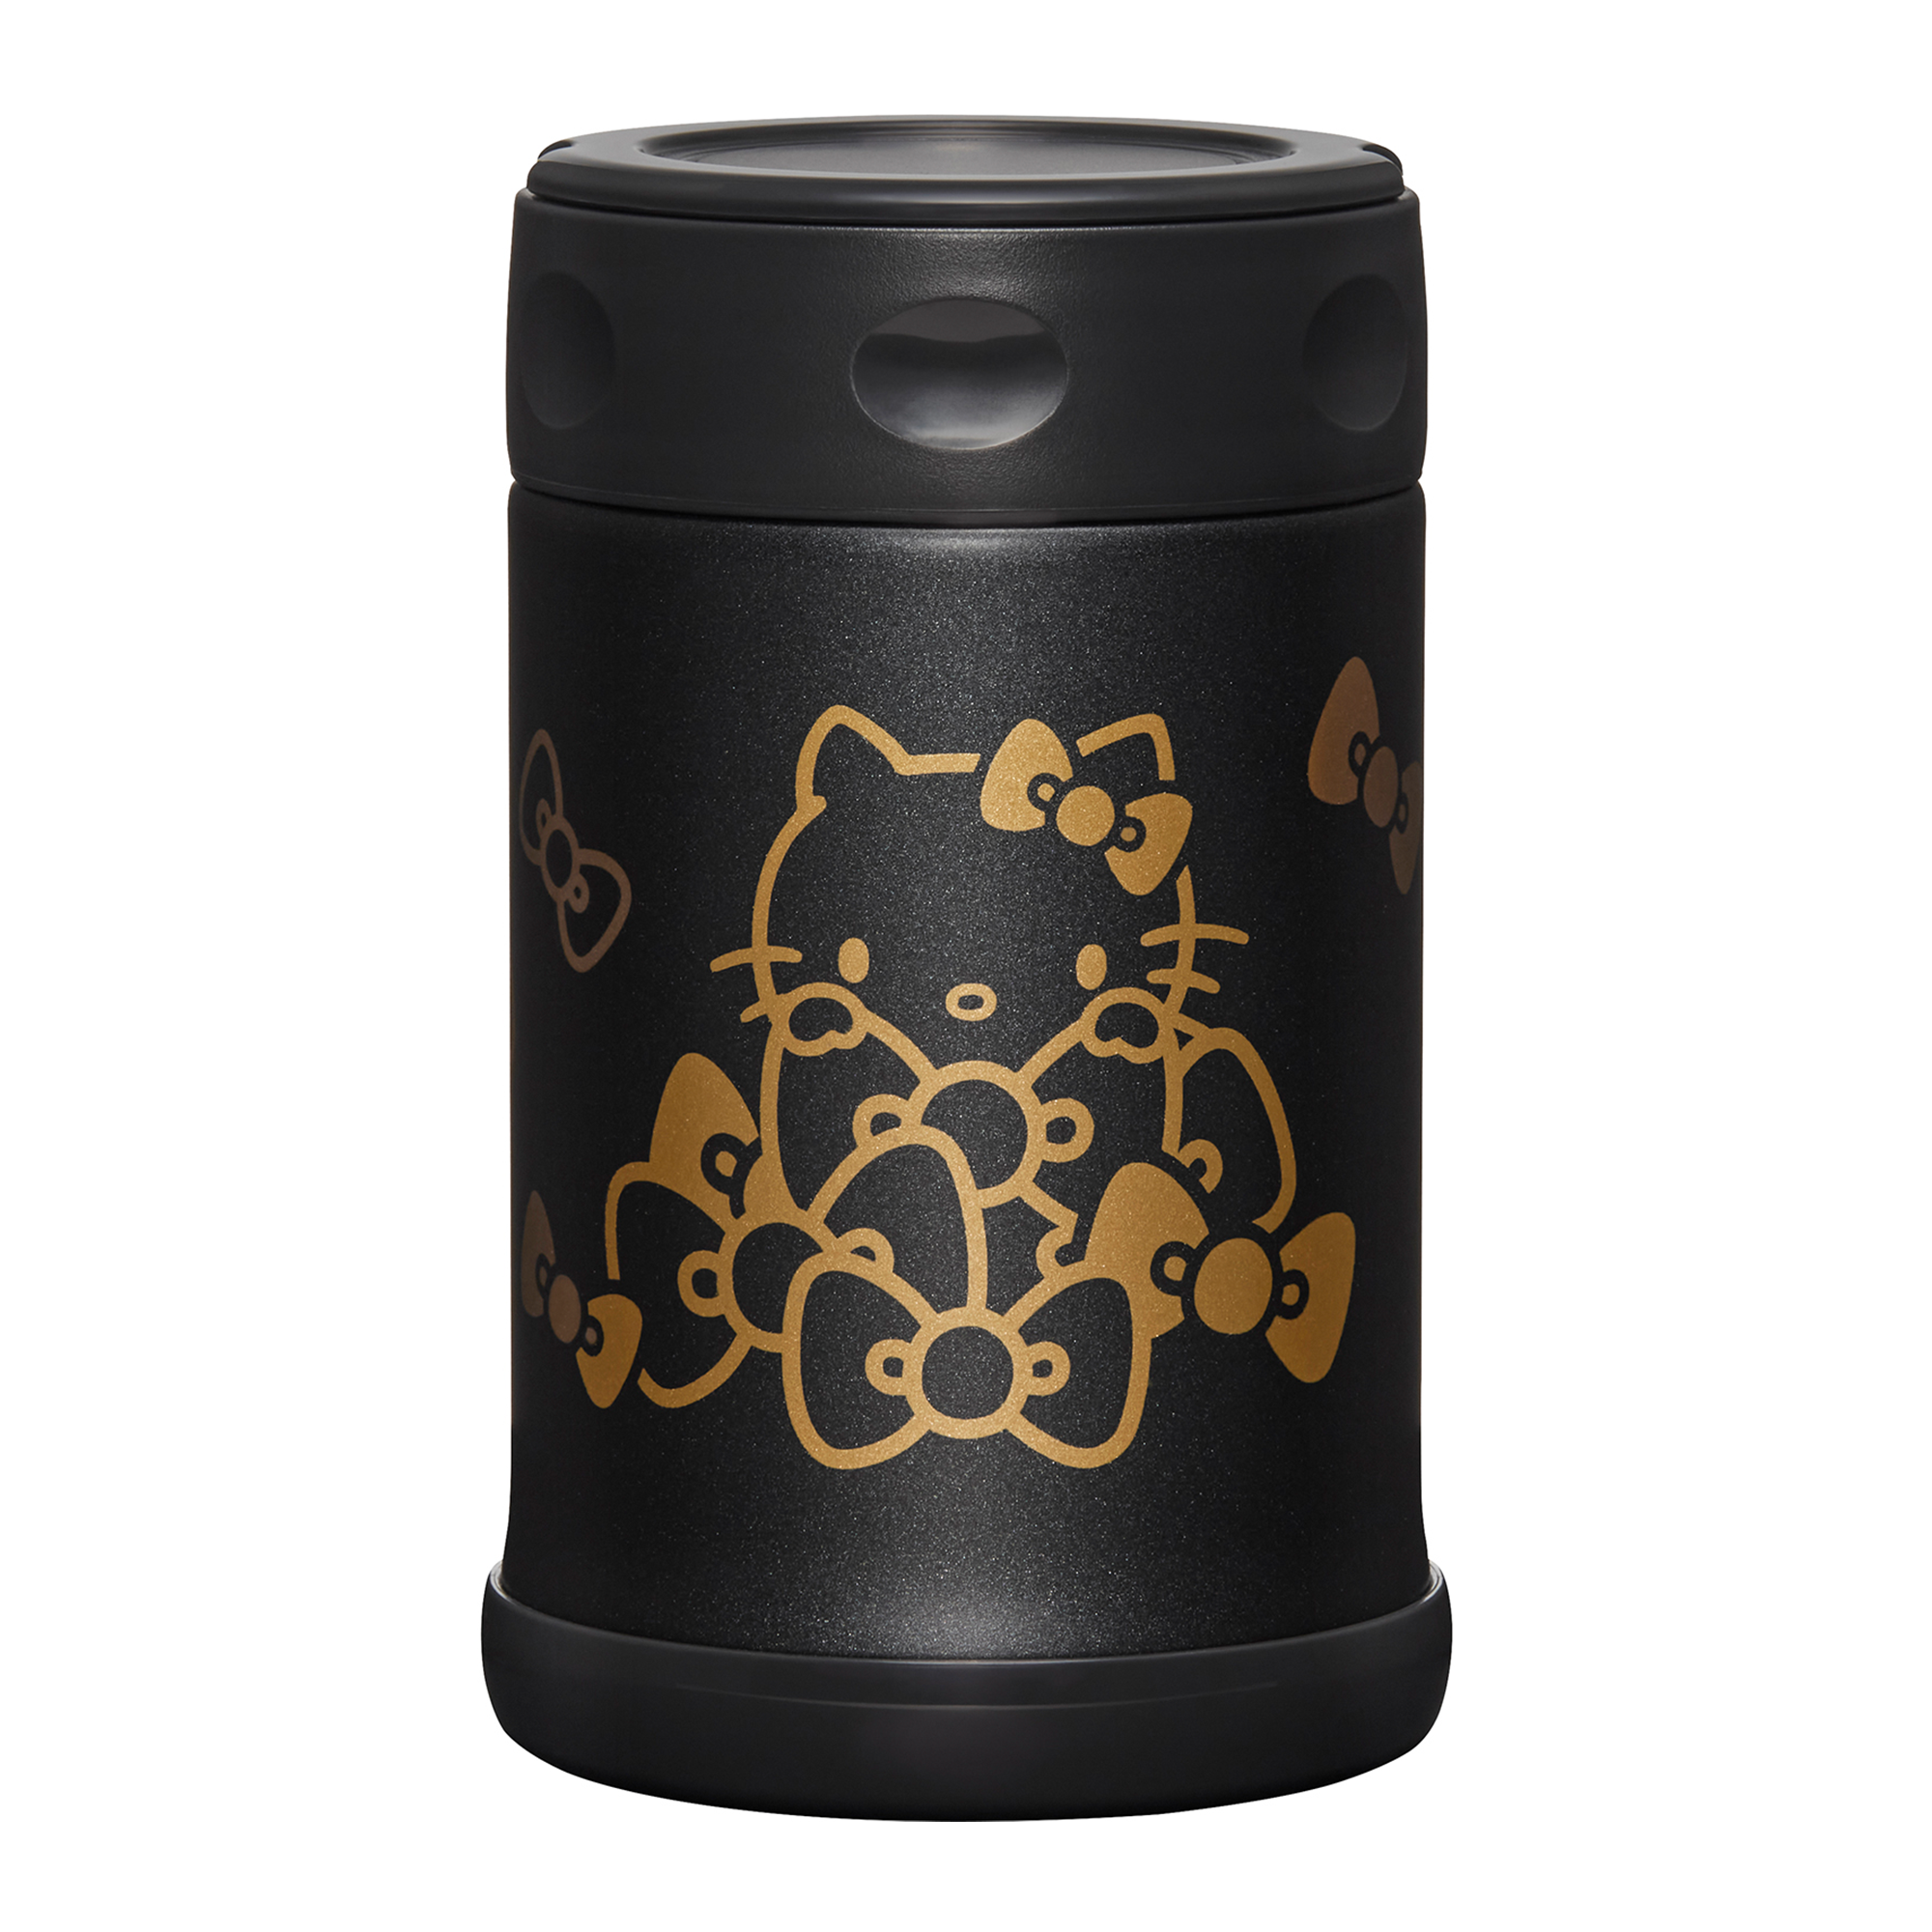 Hello Kitty x Zojirushi White Stainless Steel Food Jar